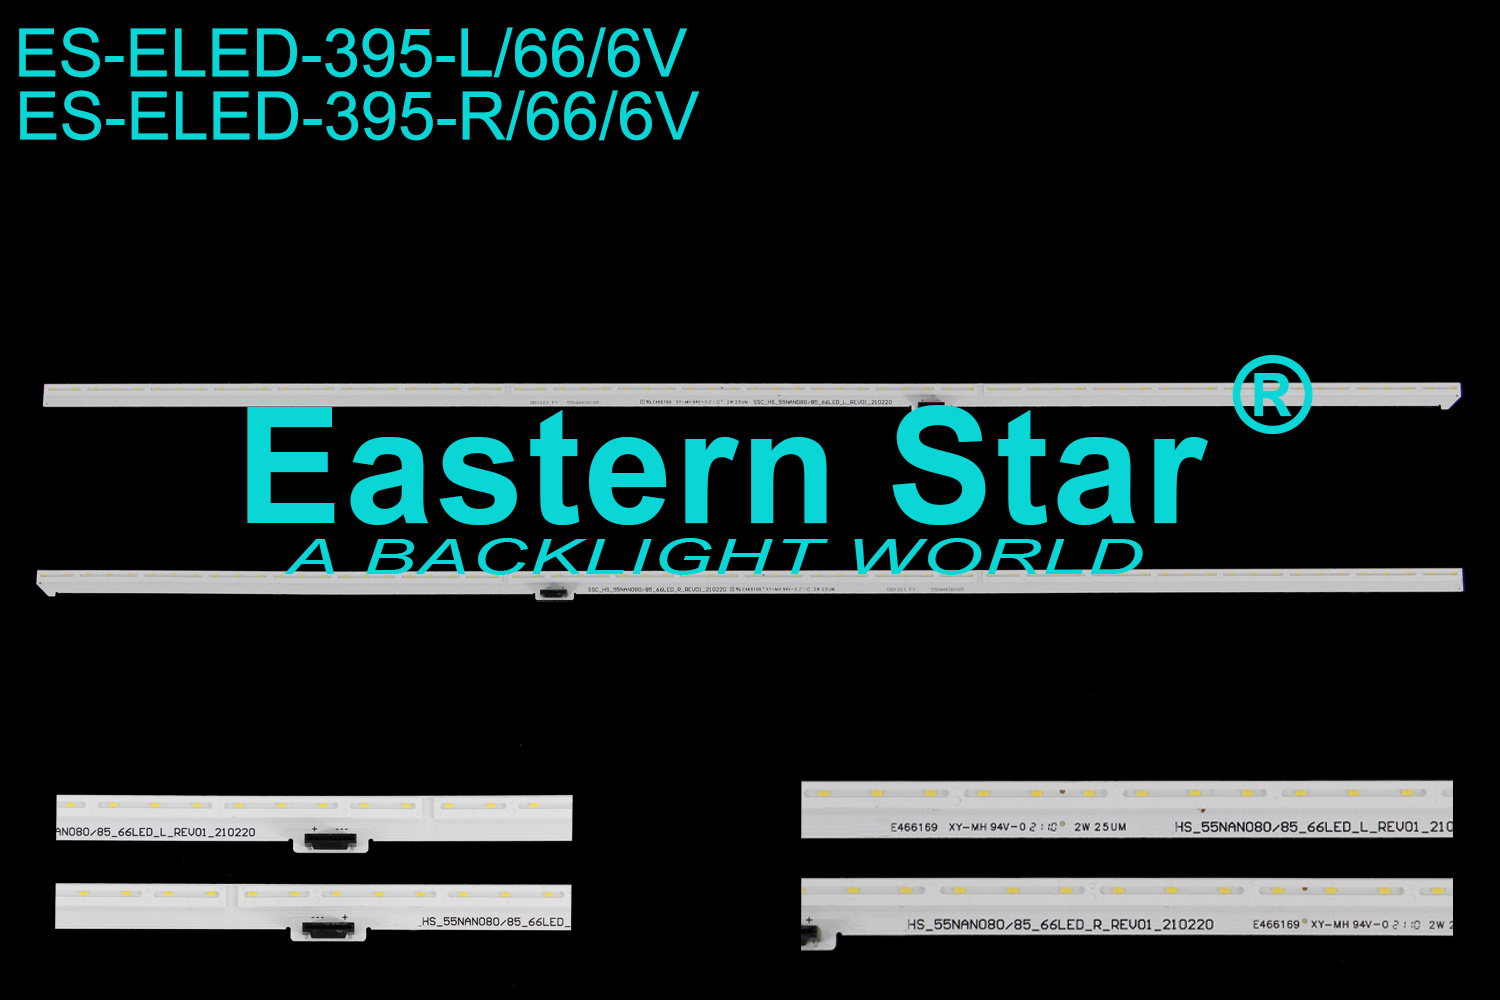 ES-ELED-395 ELED/EDGE TV backlight use for 55'' Lg HS_55NANO80/85_66LED_L/R_REV01_210210 LED STRIPS(2)